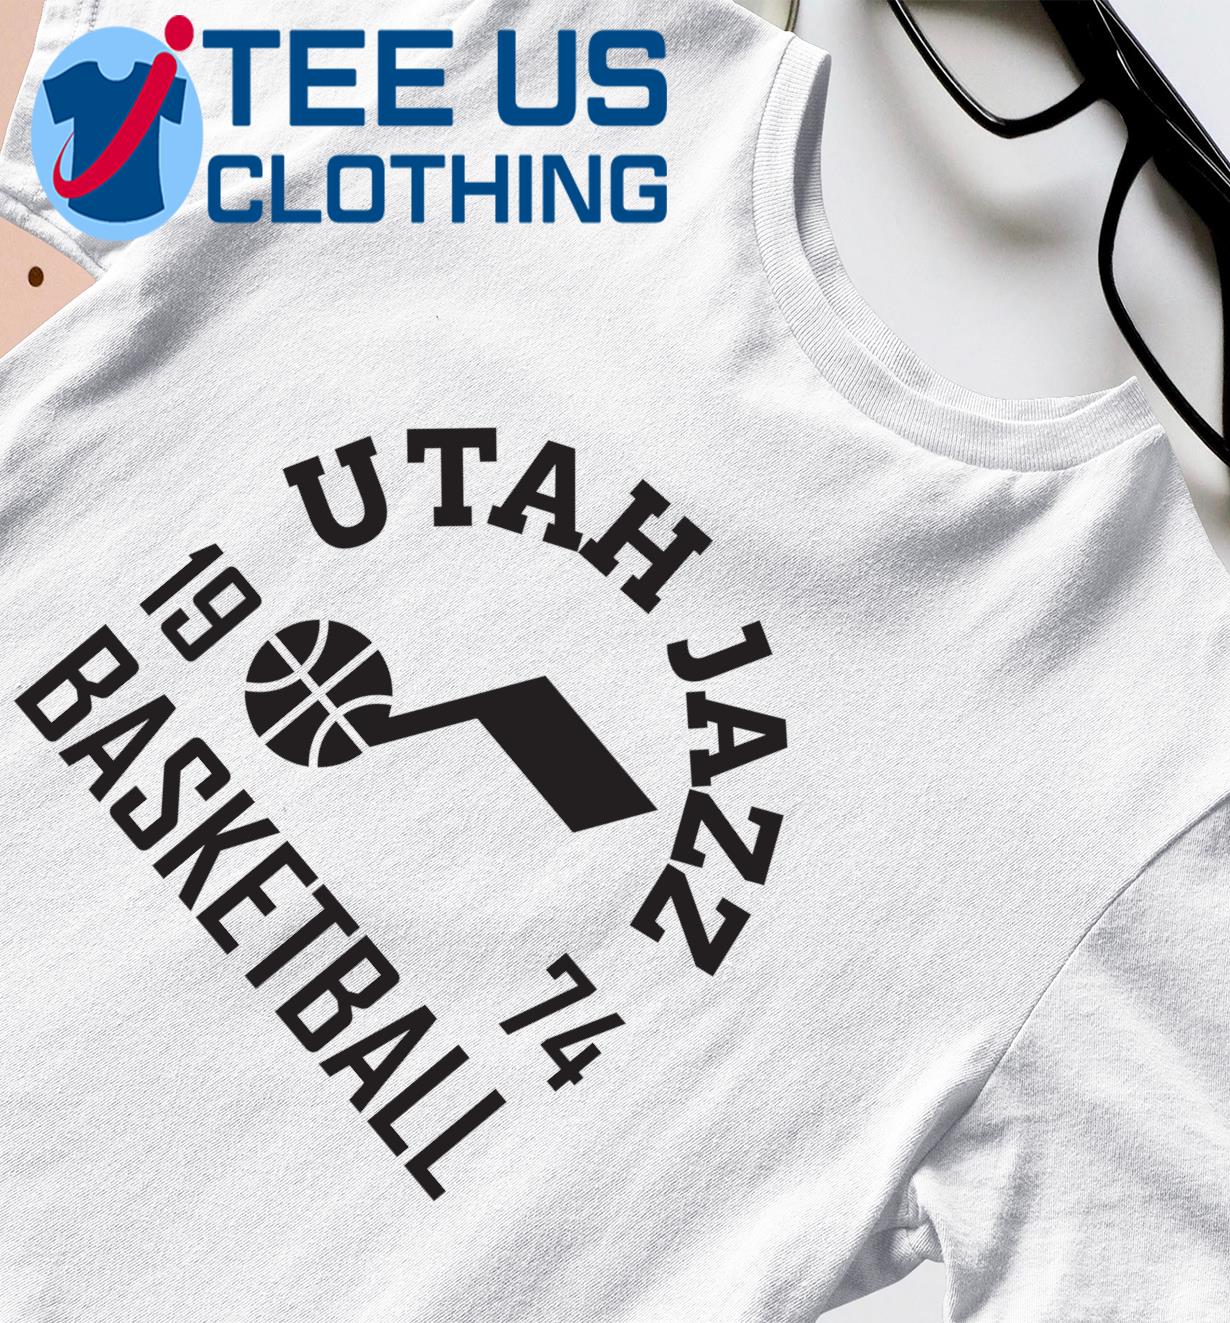 Utah Jazz Basketball 1974 shirt